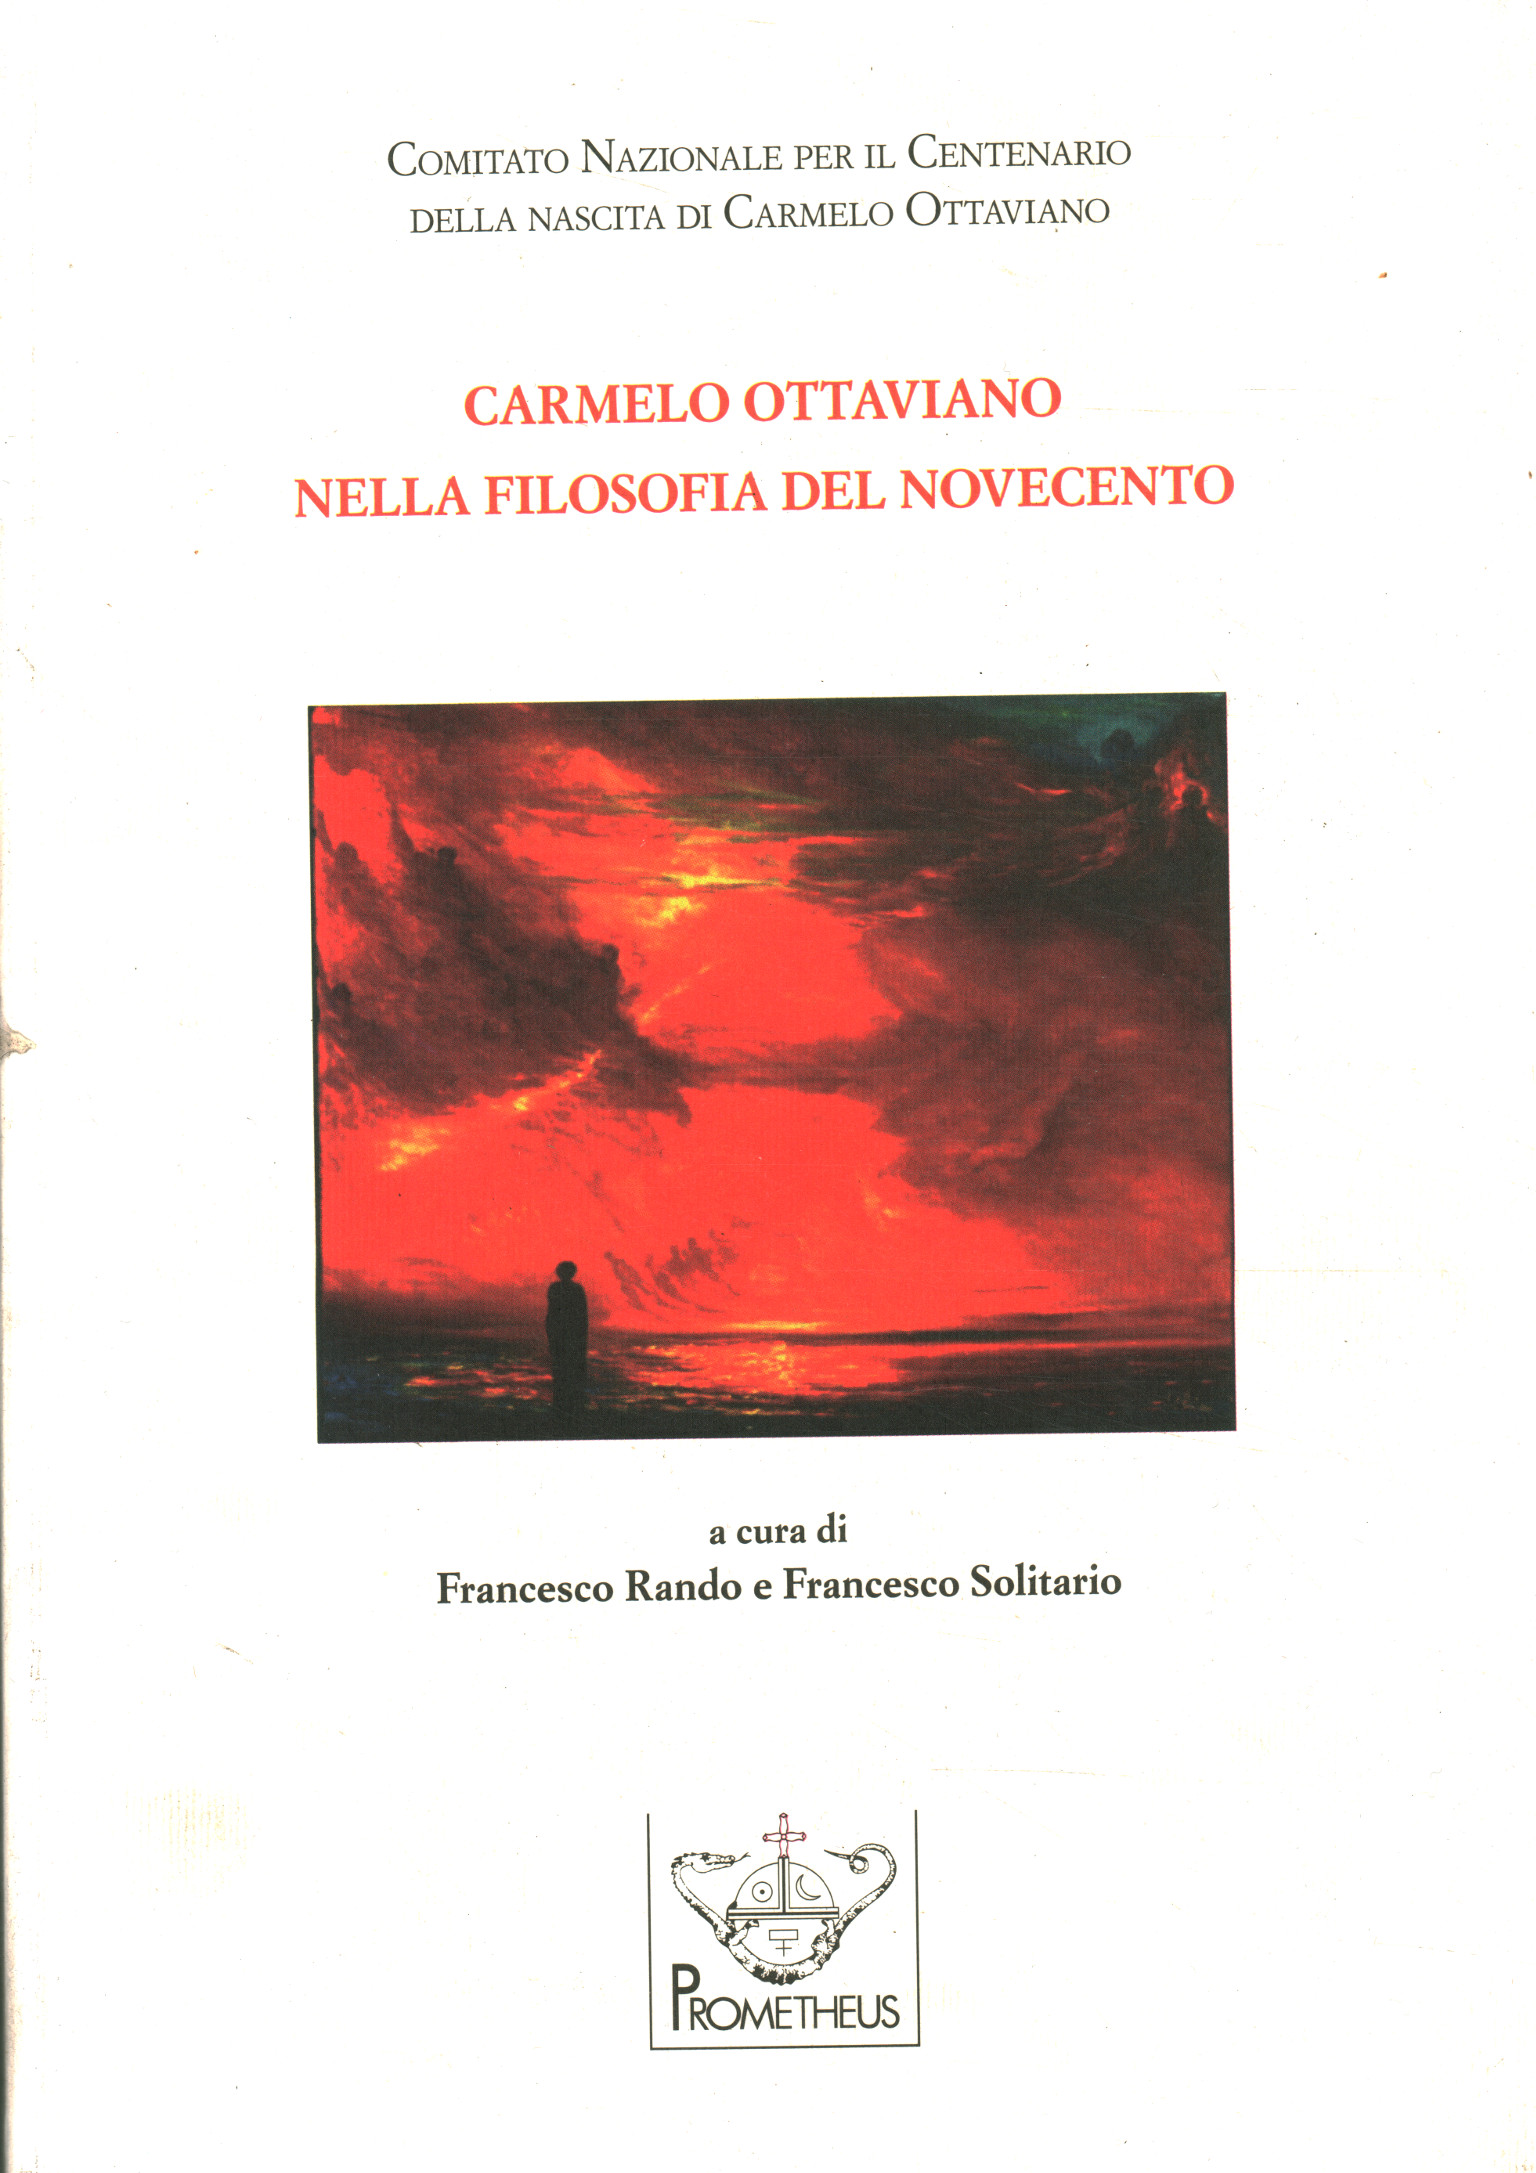 Carmelo Ottaviano dans la philosophie du Non